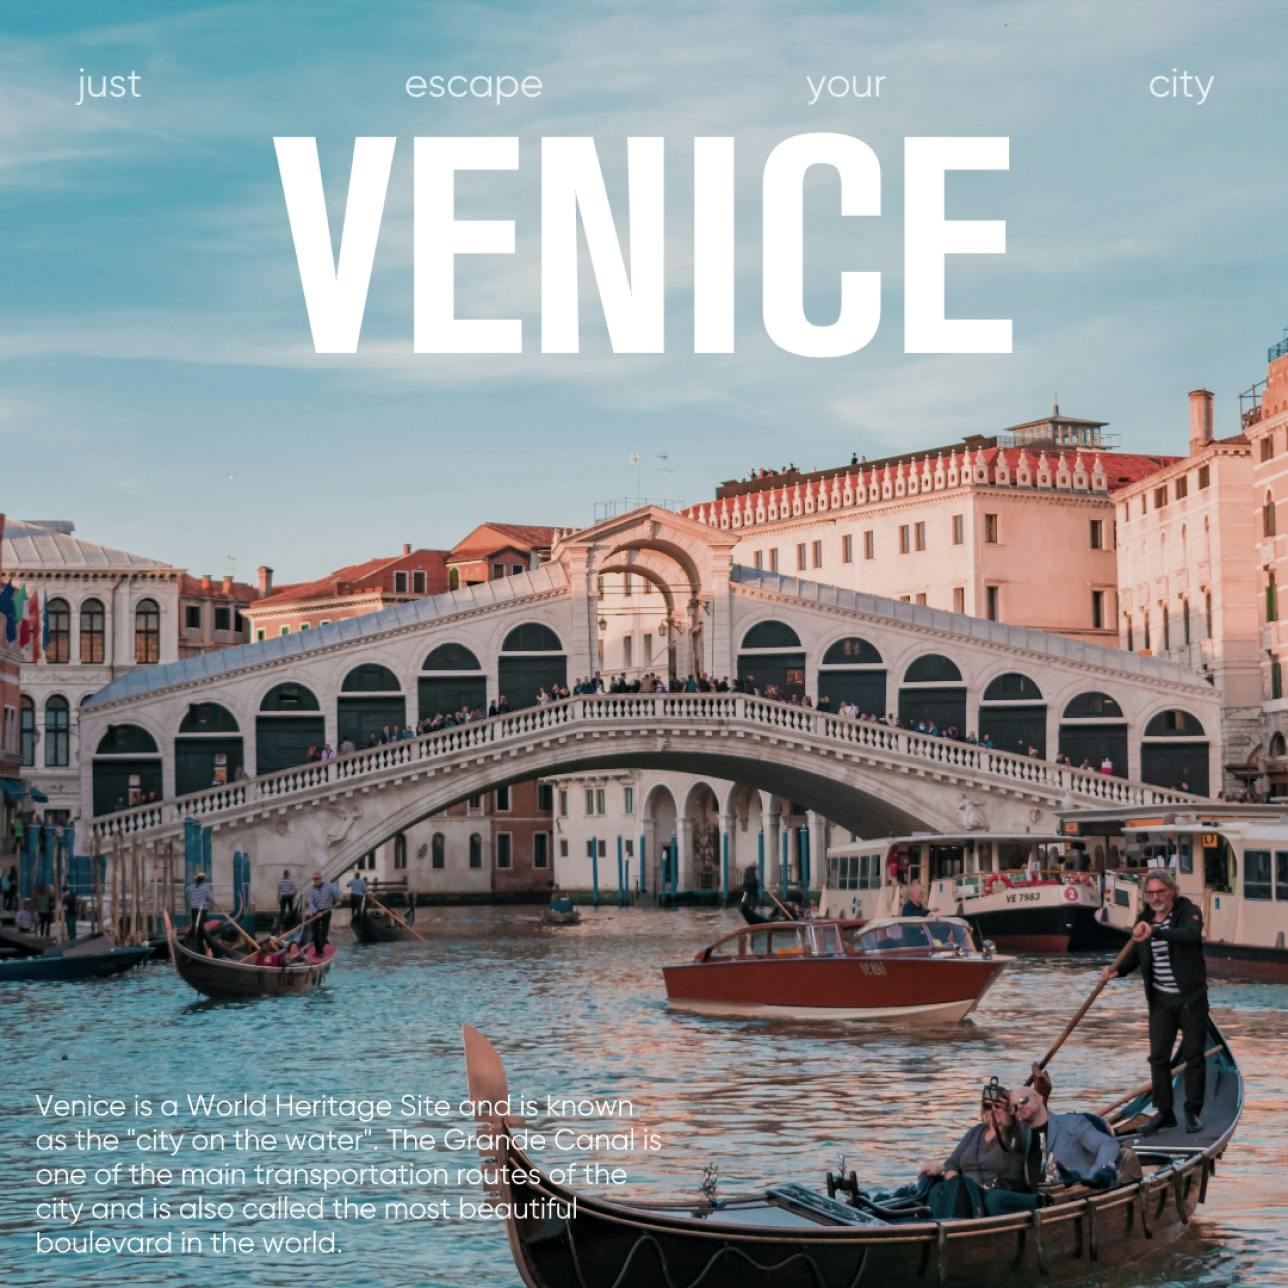 Schnitzeljagd durch Venedig mit Ihrem Handy